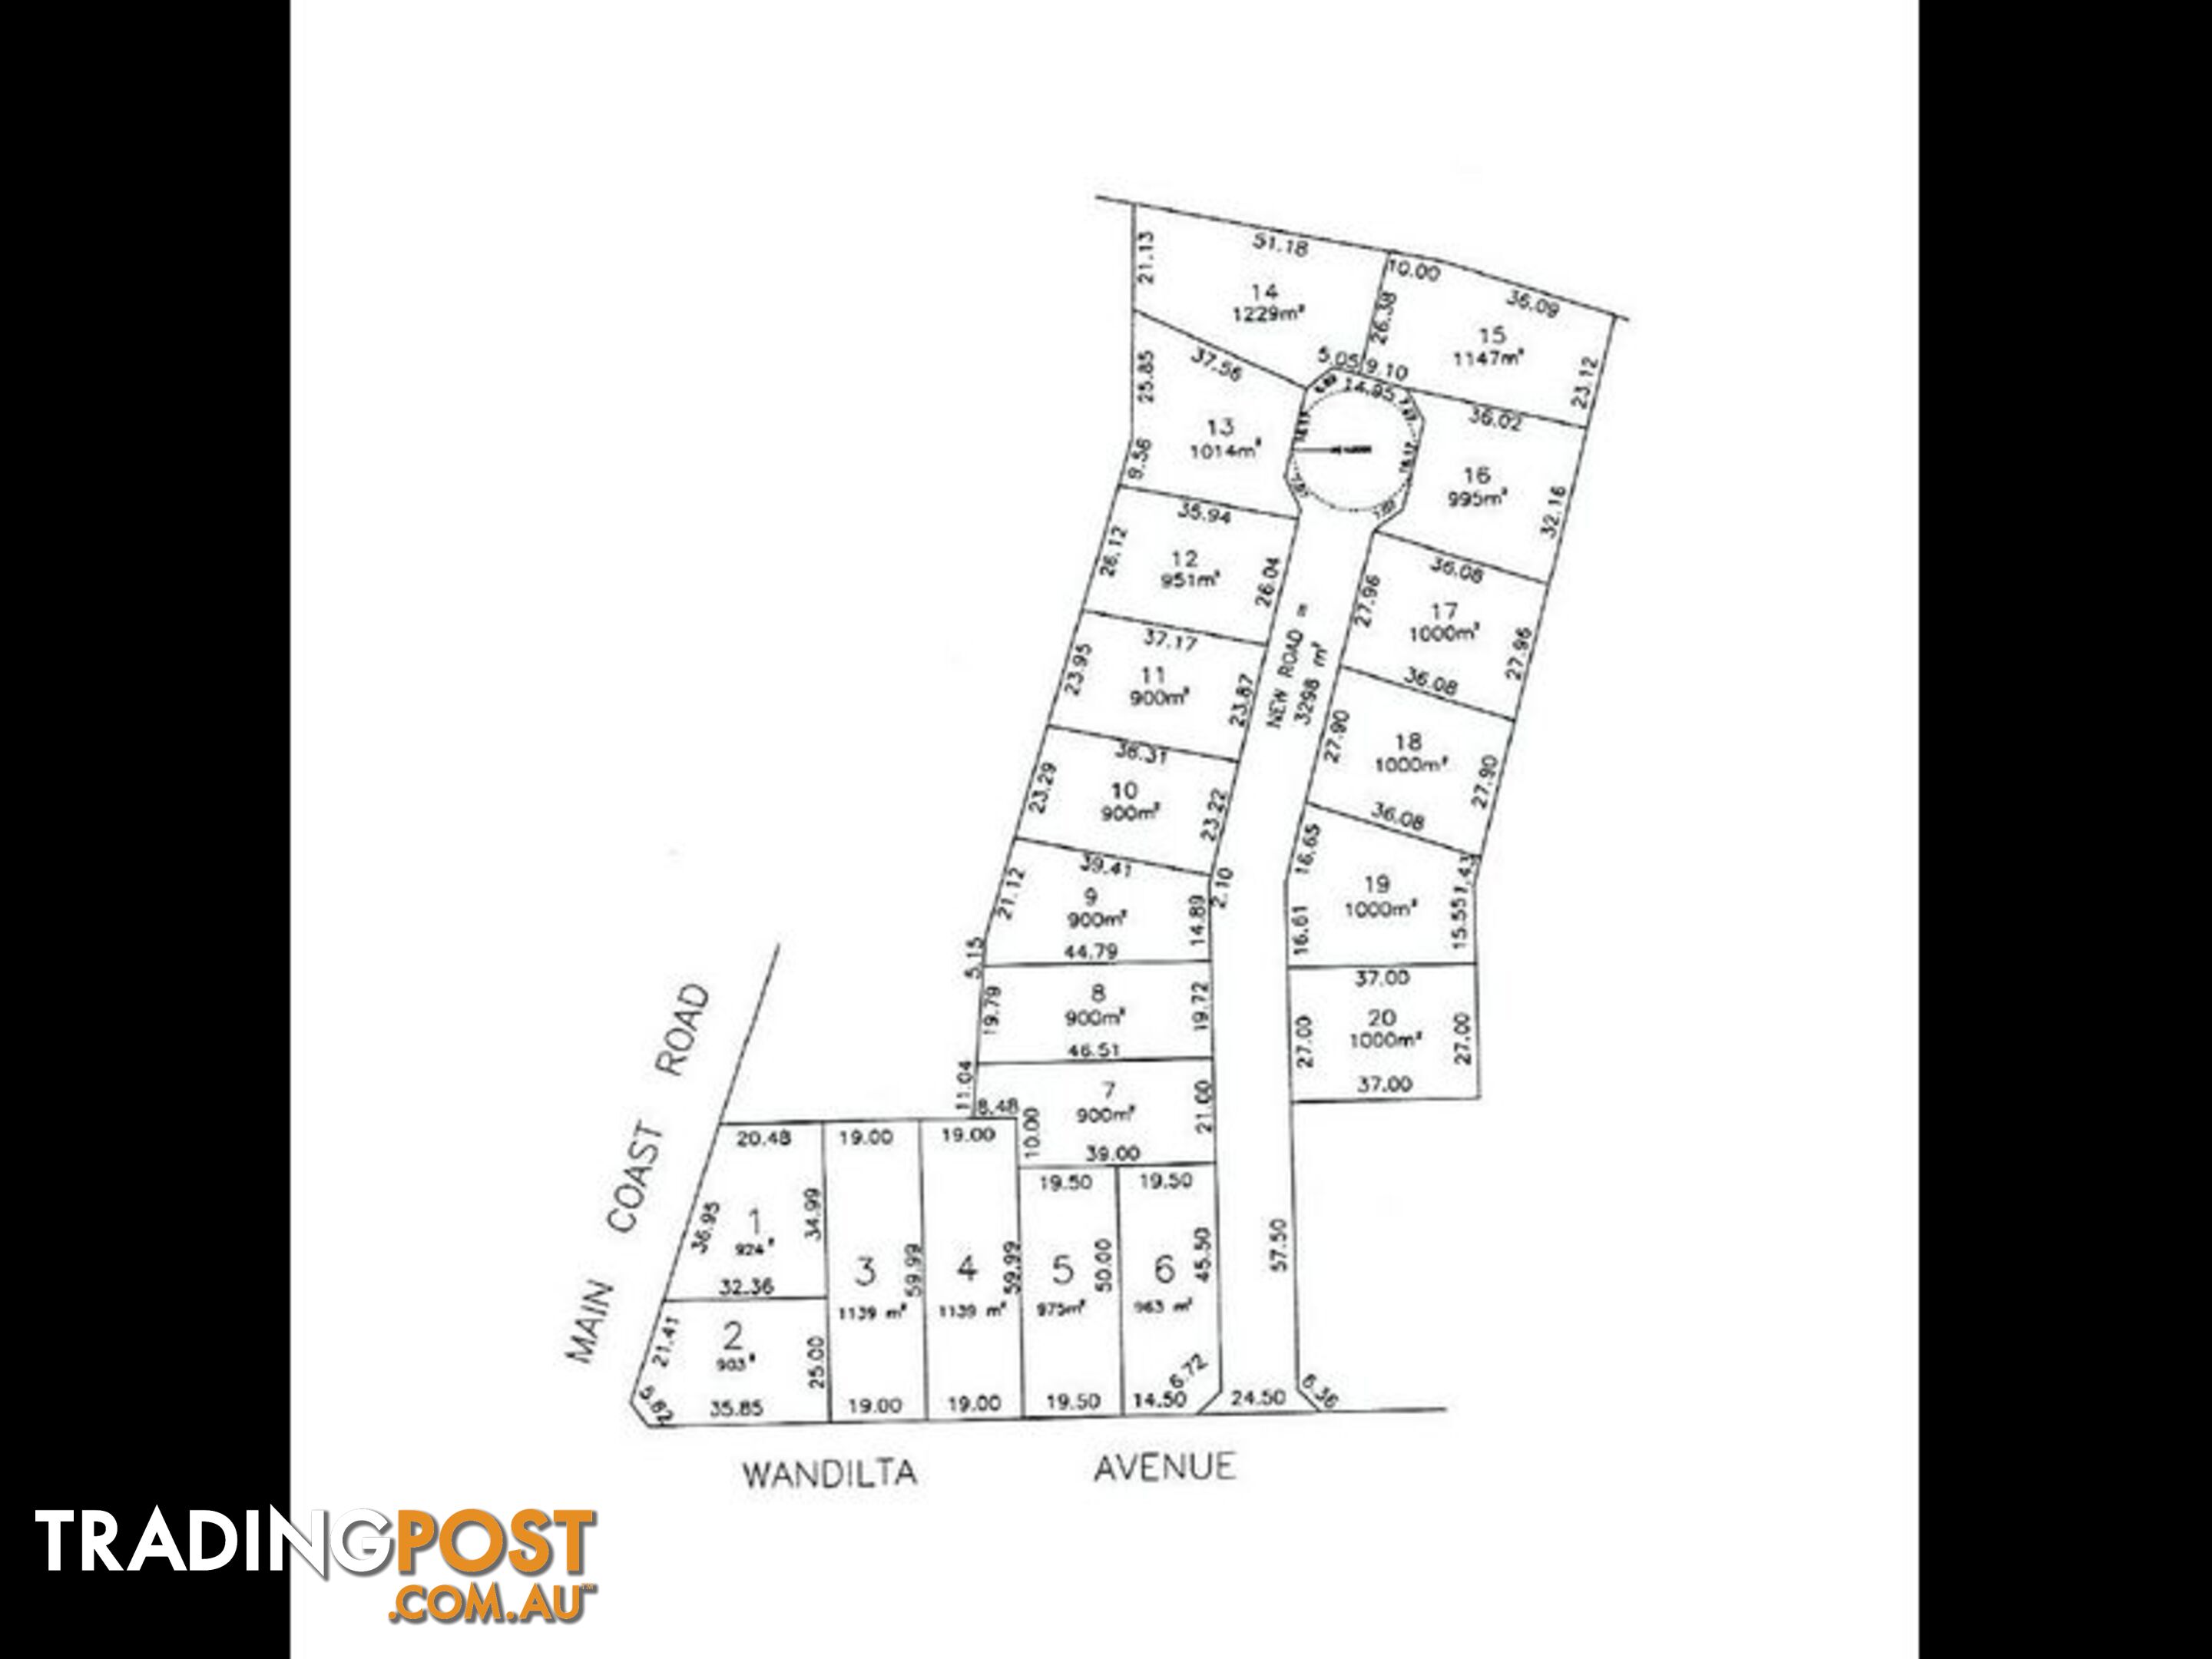 Lot 77 (3- Wandilta Avenue PORT CLINTON SA 5570